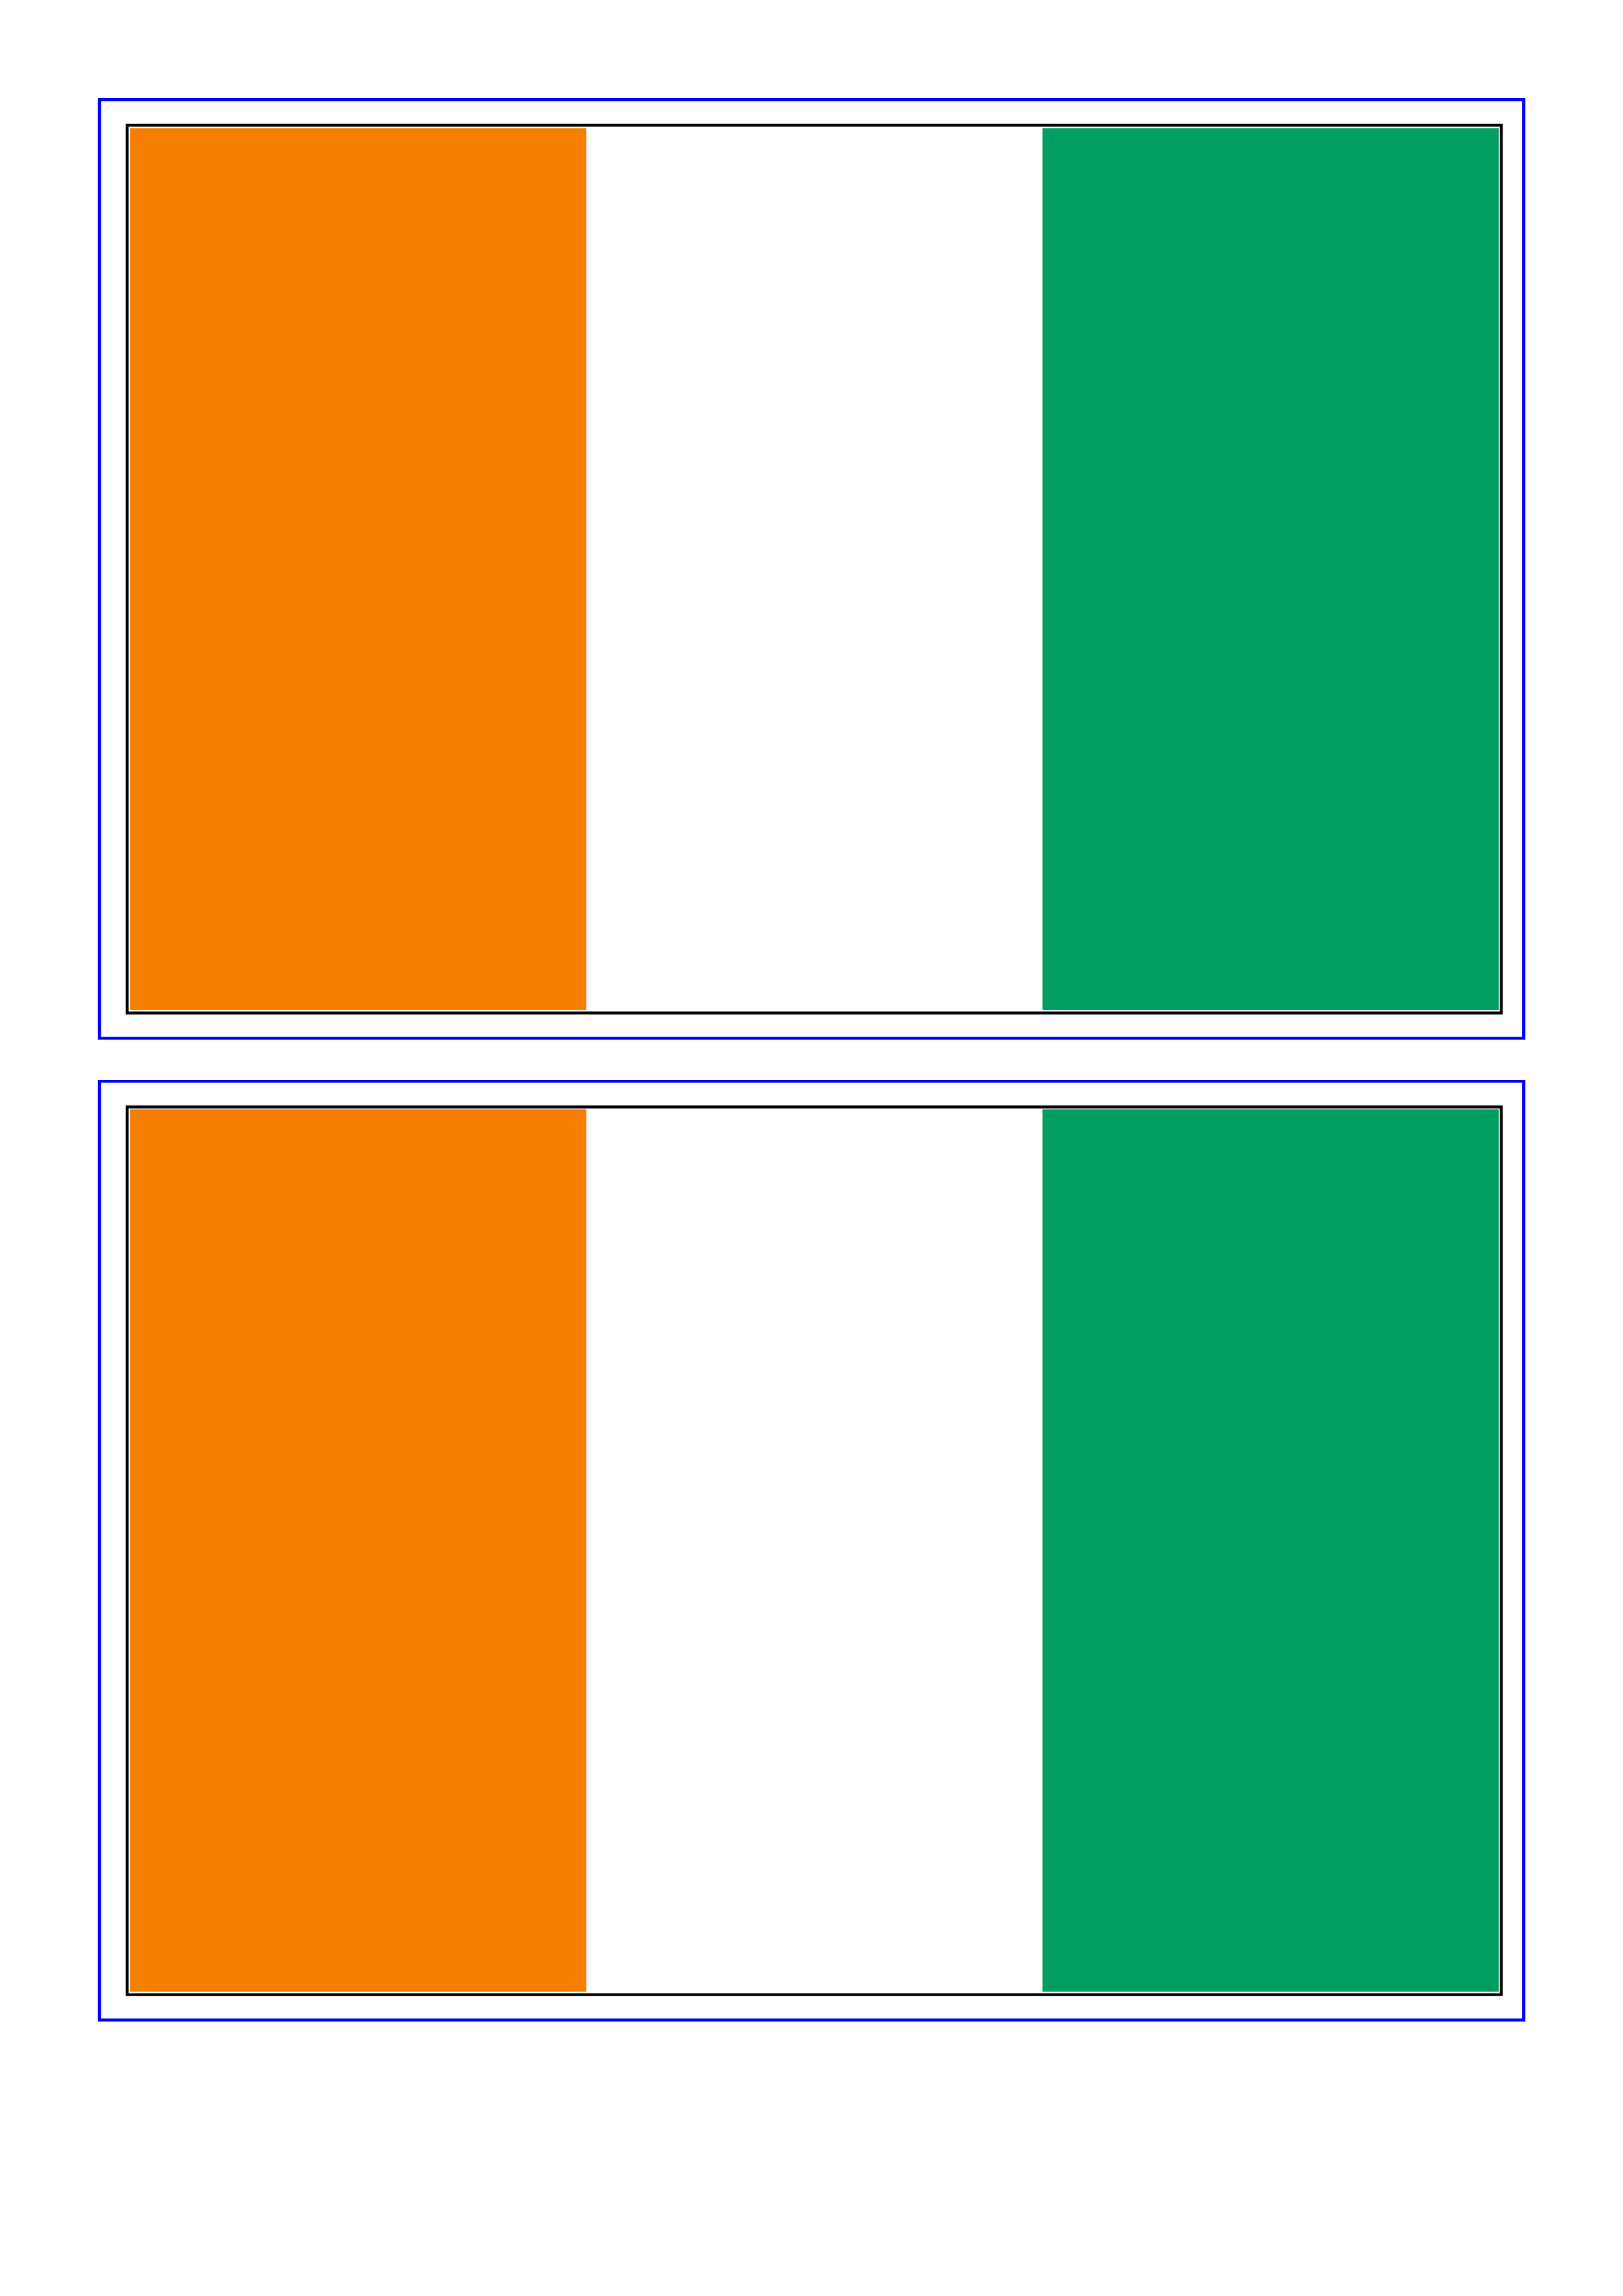 ivory coast flag template plantilla imagen principal